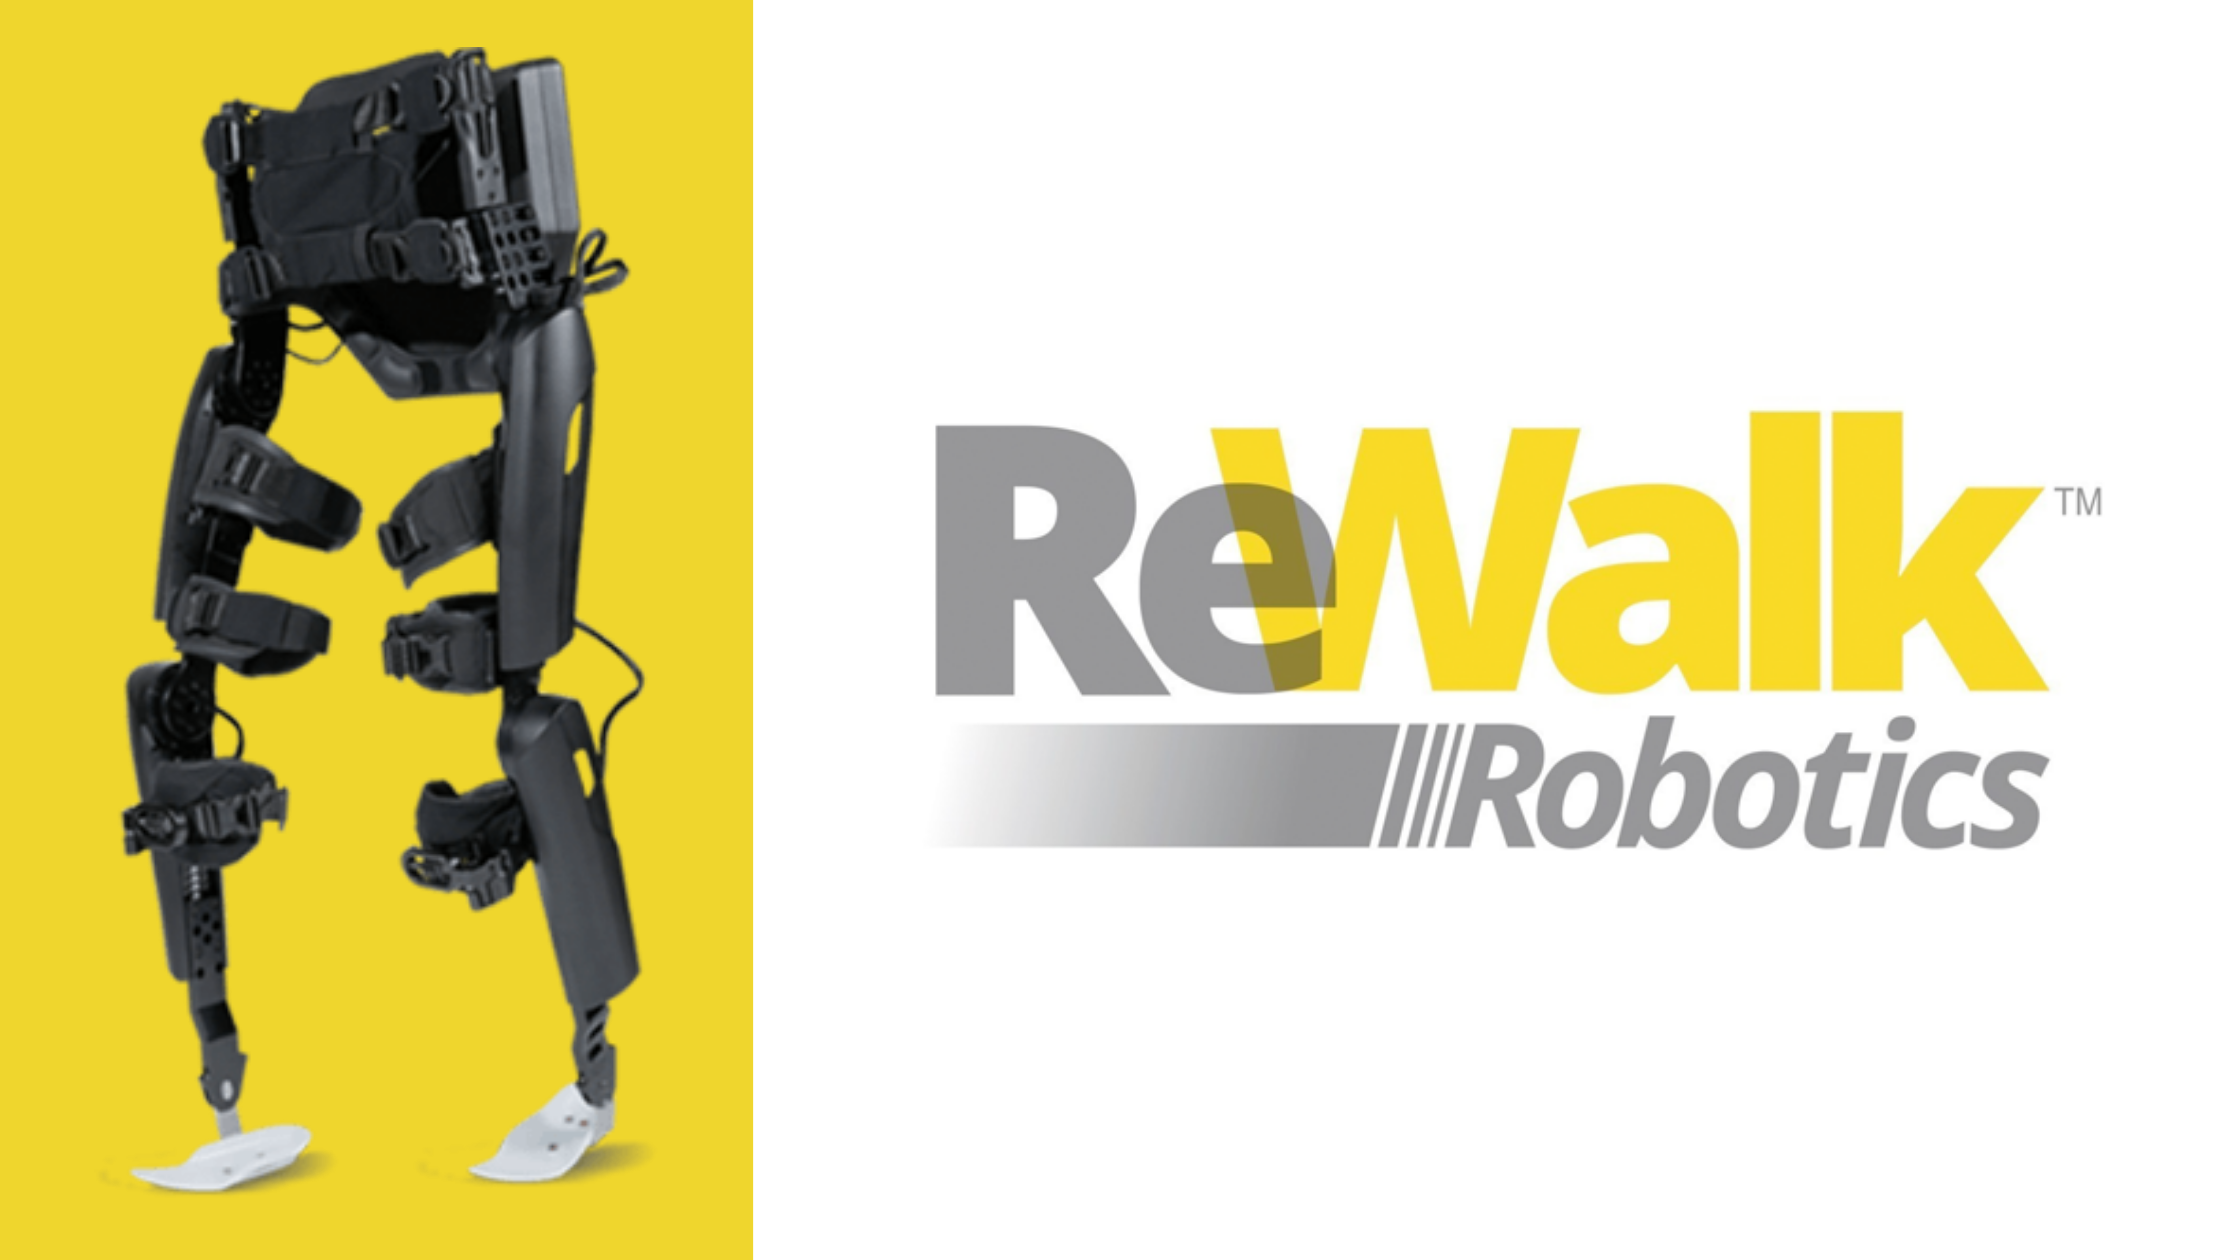 Creator FDA Robotics Exoskeleton ReWalk Set at $50M IPO